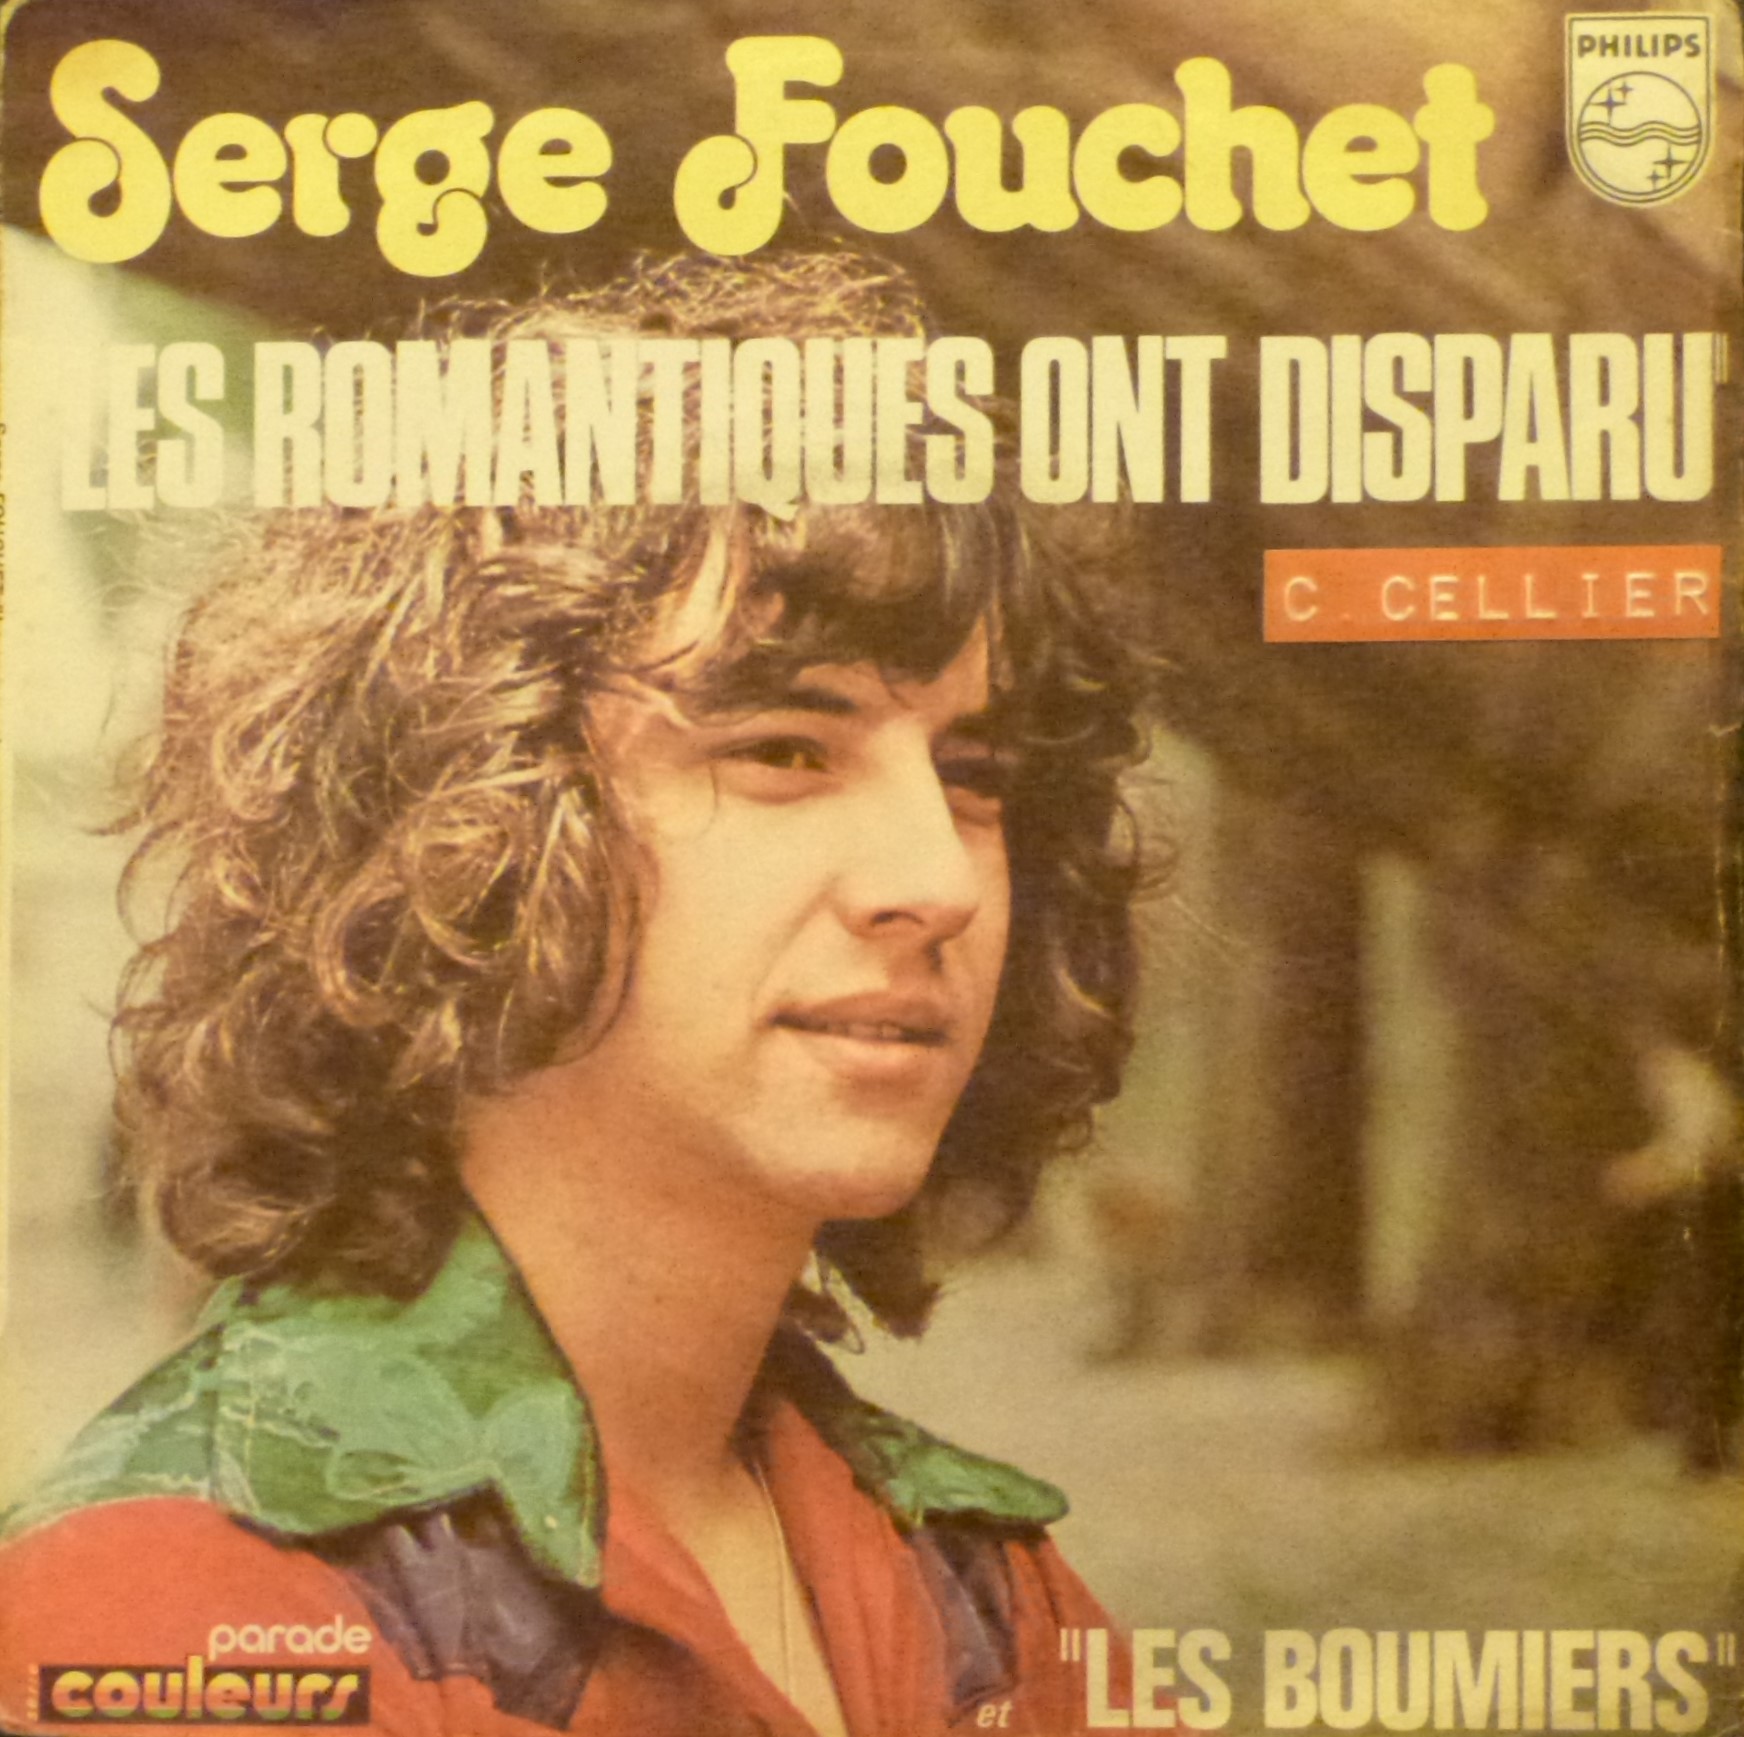 Serge Fouchet